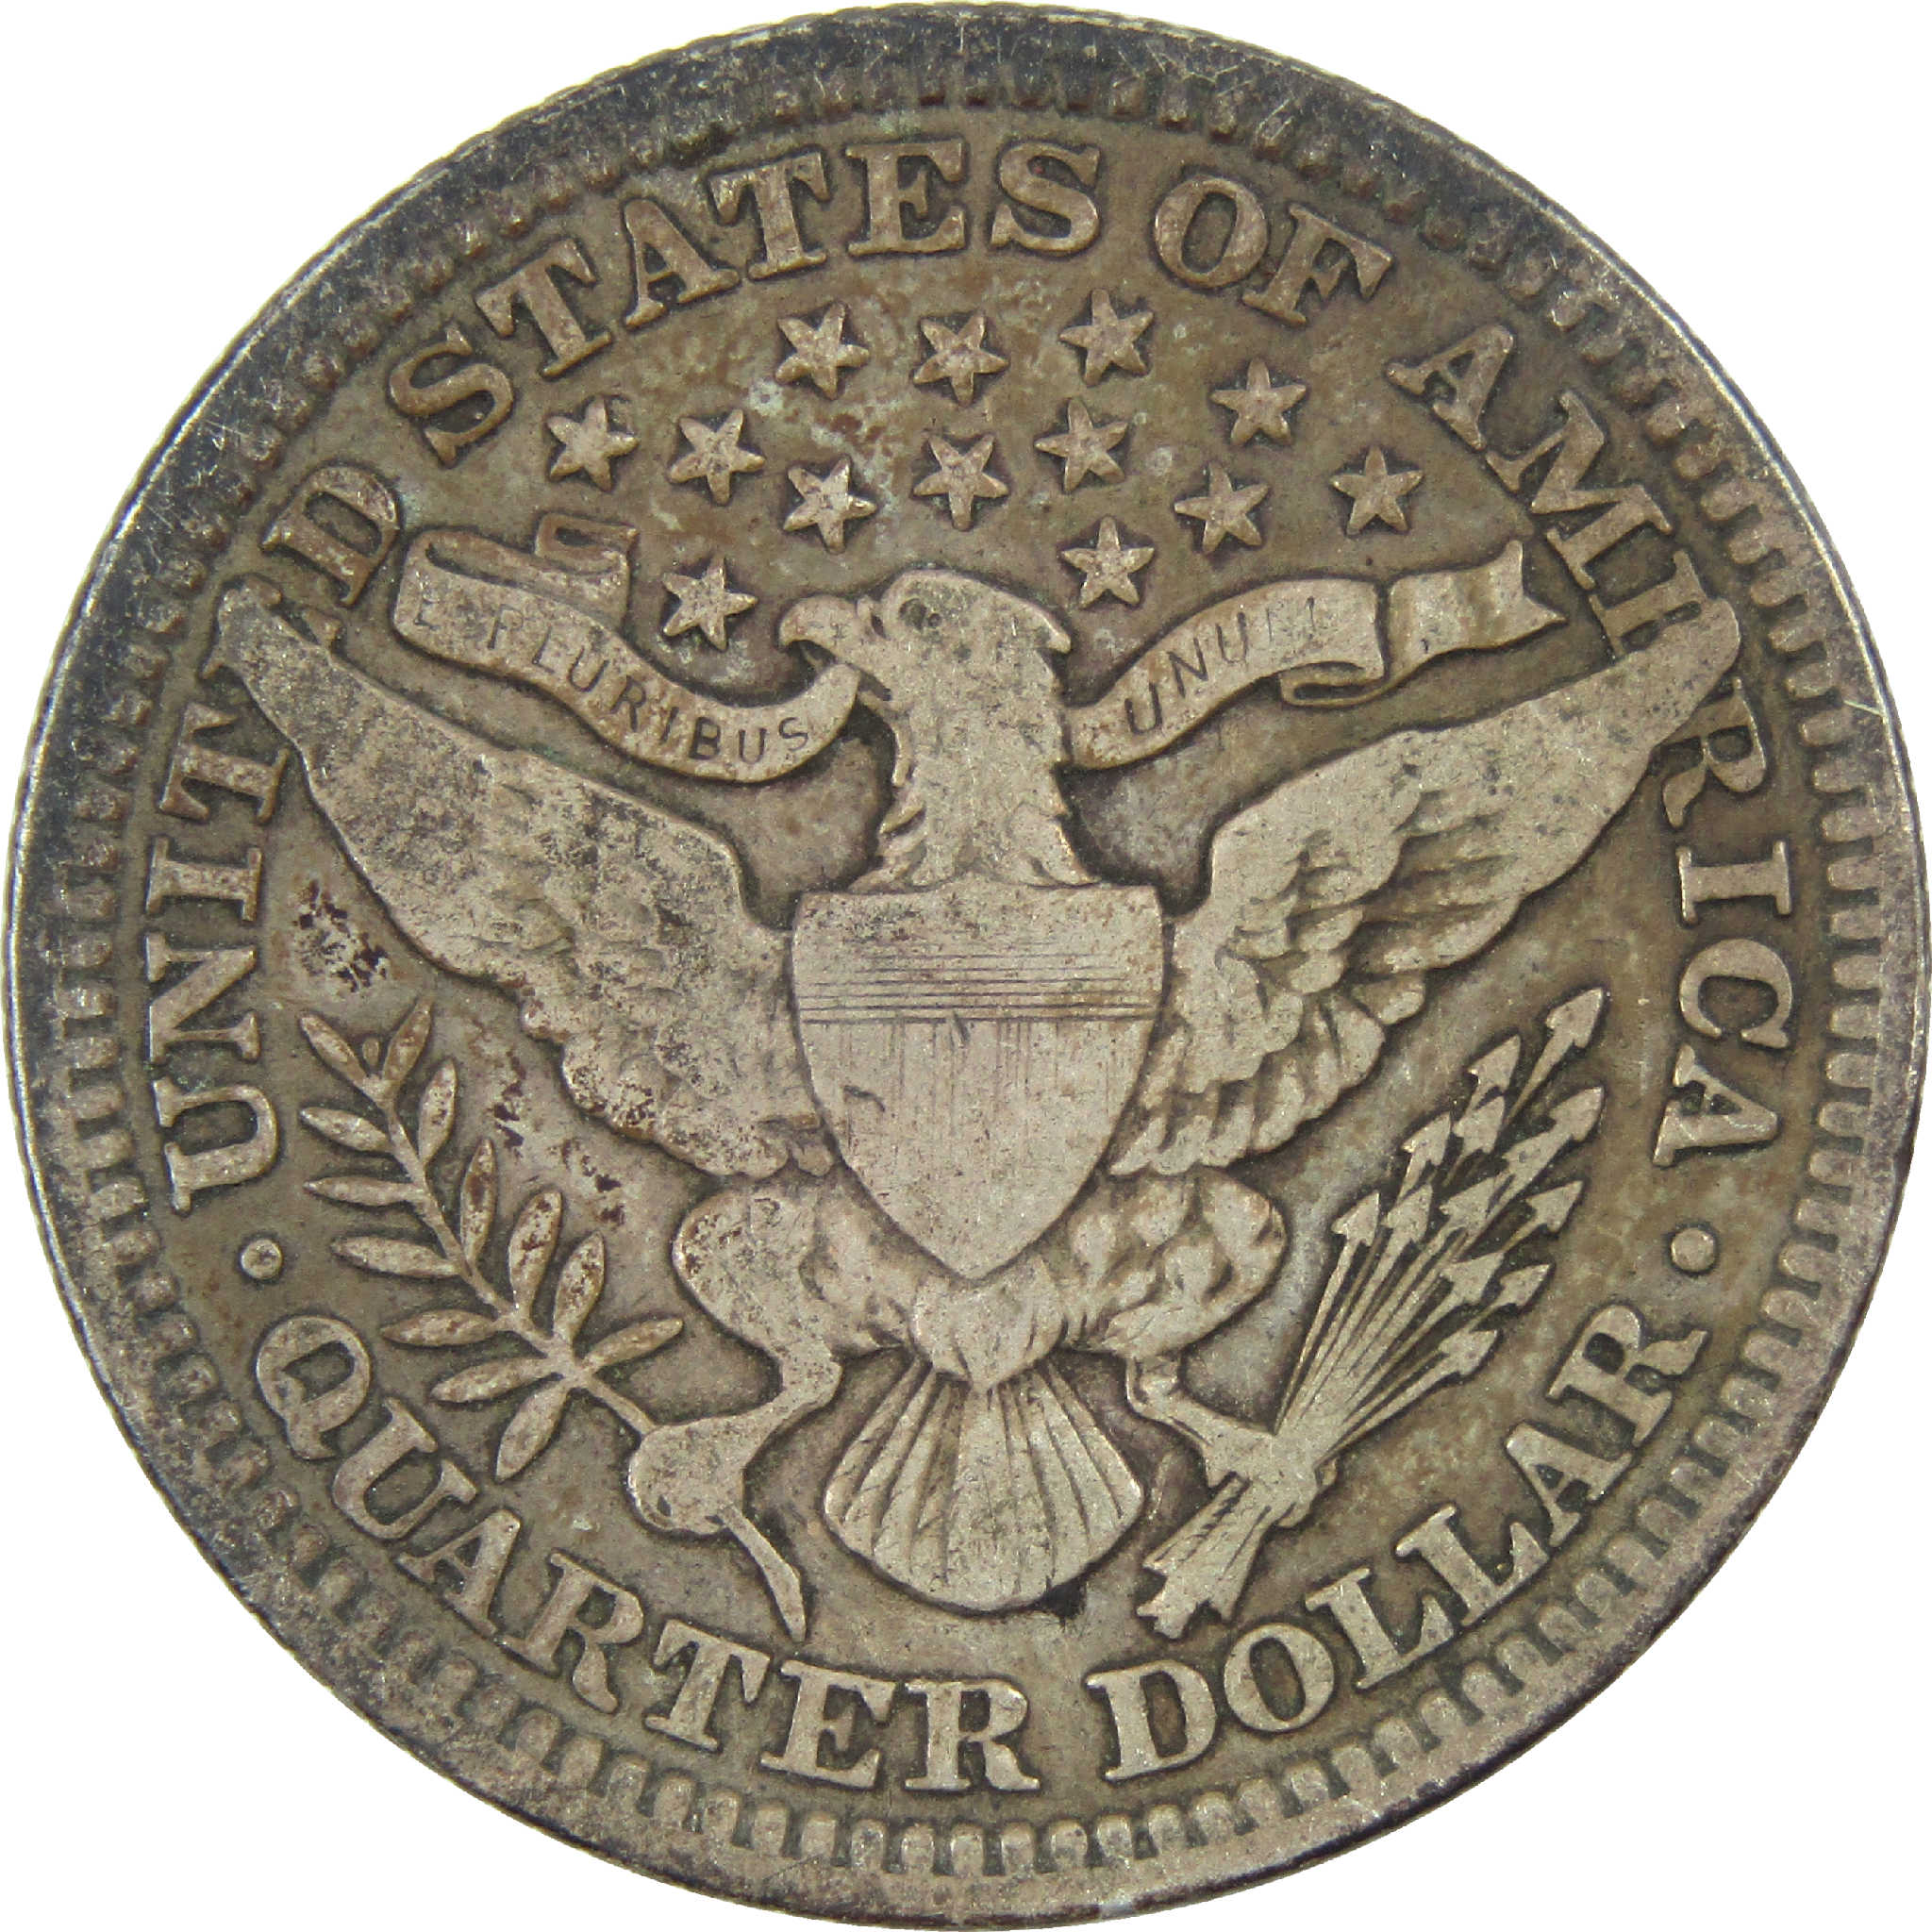 1915 Barber Quarter VG Very Good Silver 25c Coin SKU:I12290